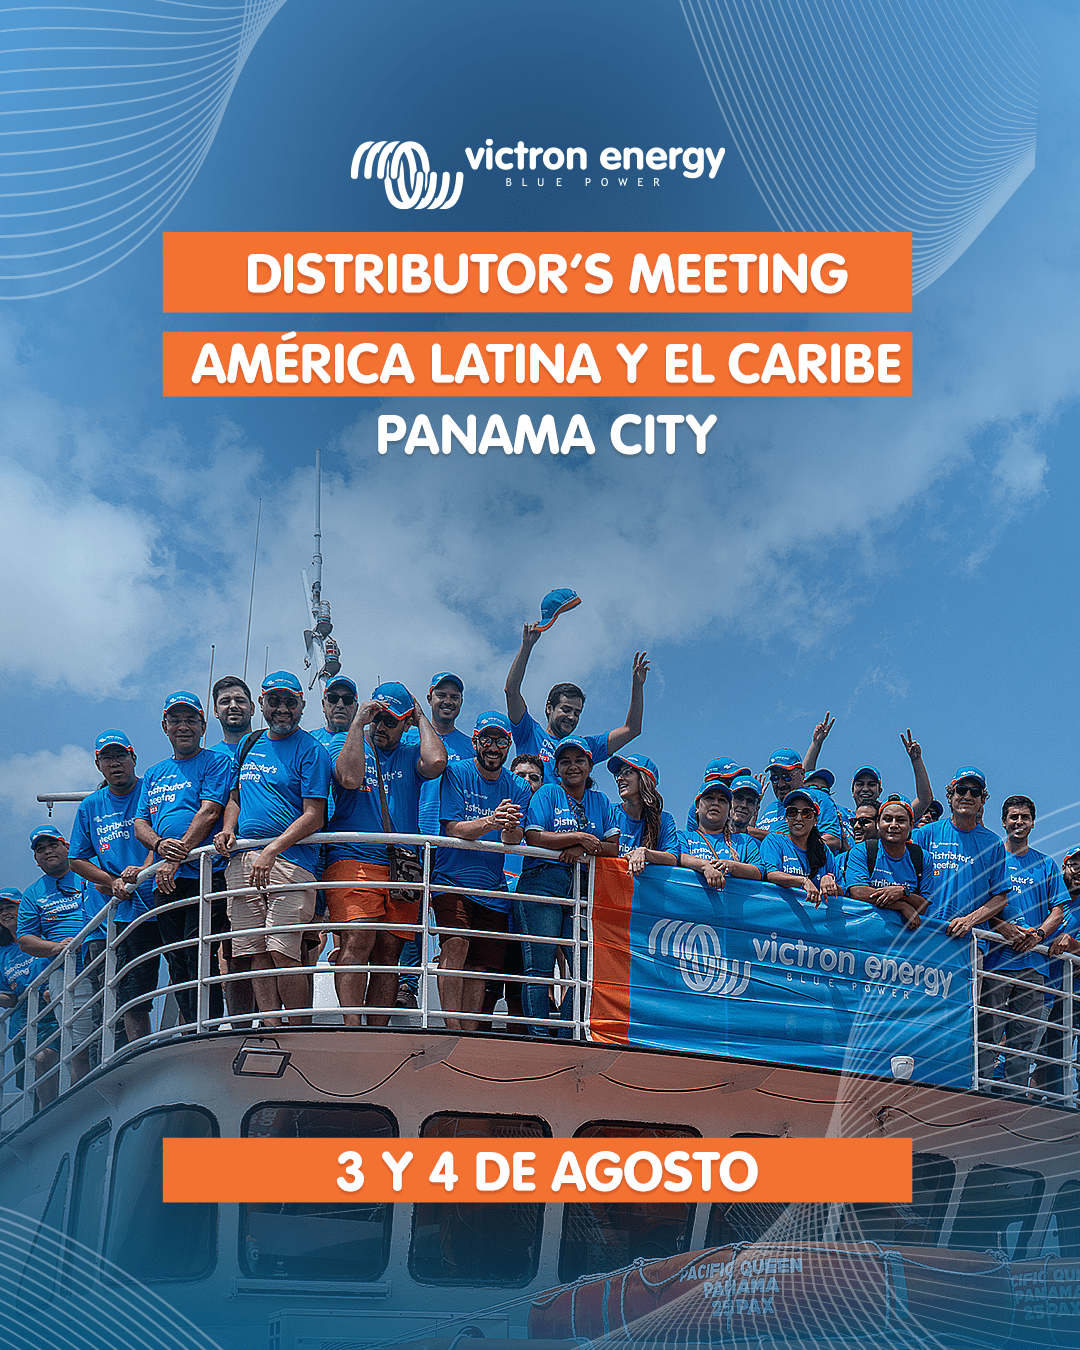 Distributor’s Meeting Caribbean América Latina y el Caribe – Panama City